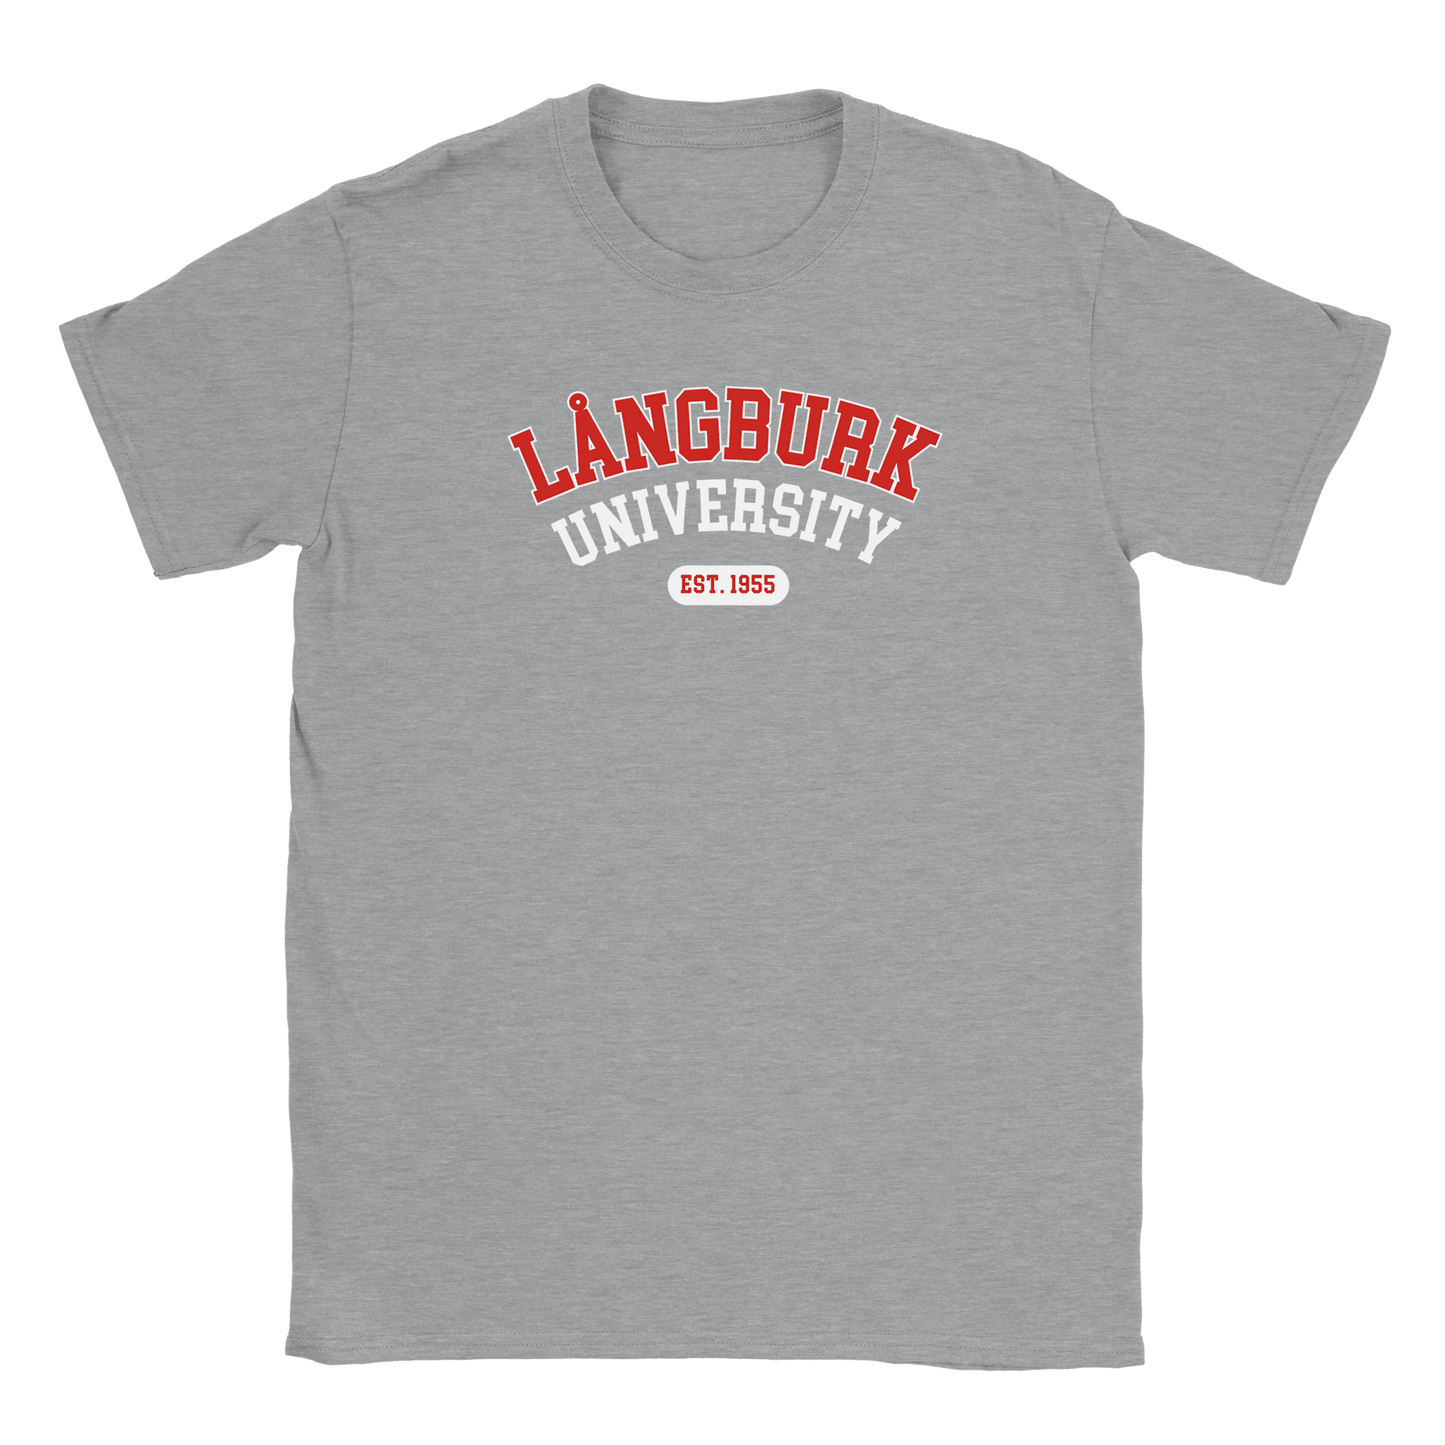 Långburk University Est. 1955 - T-shirt Grå